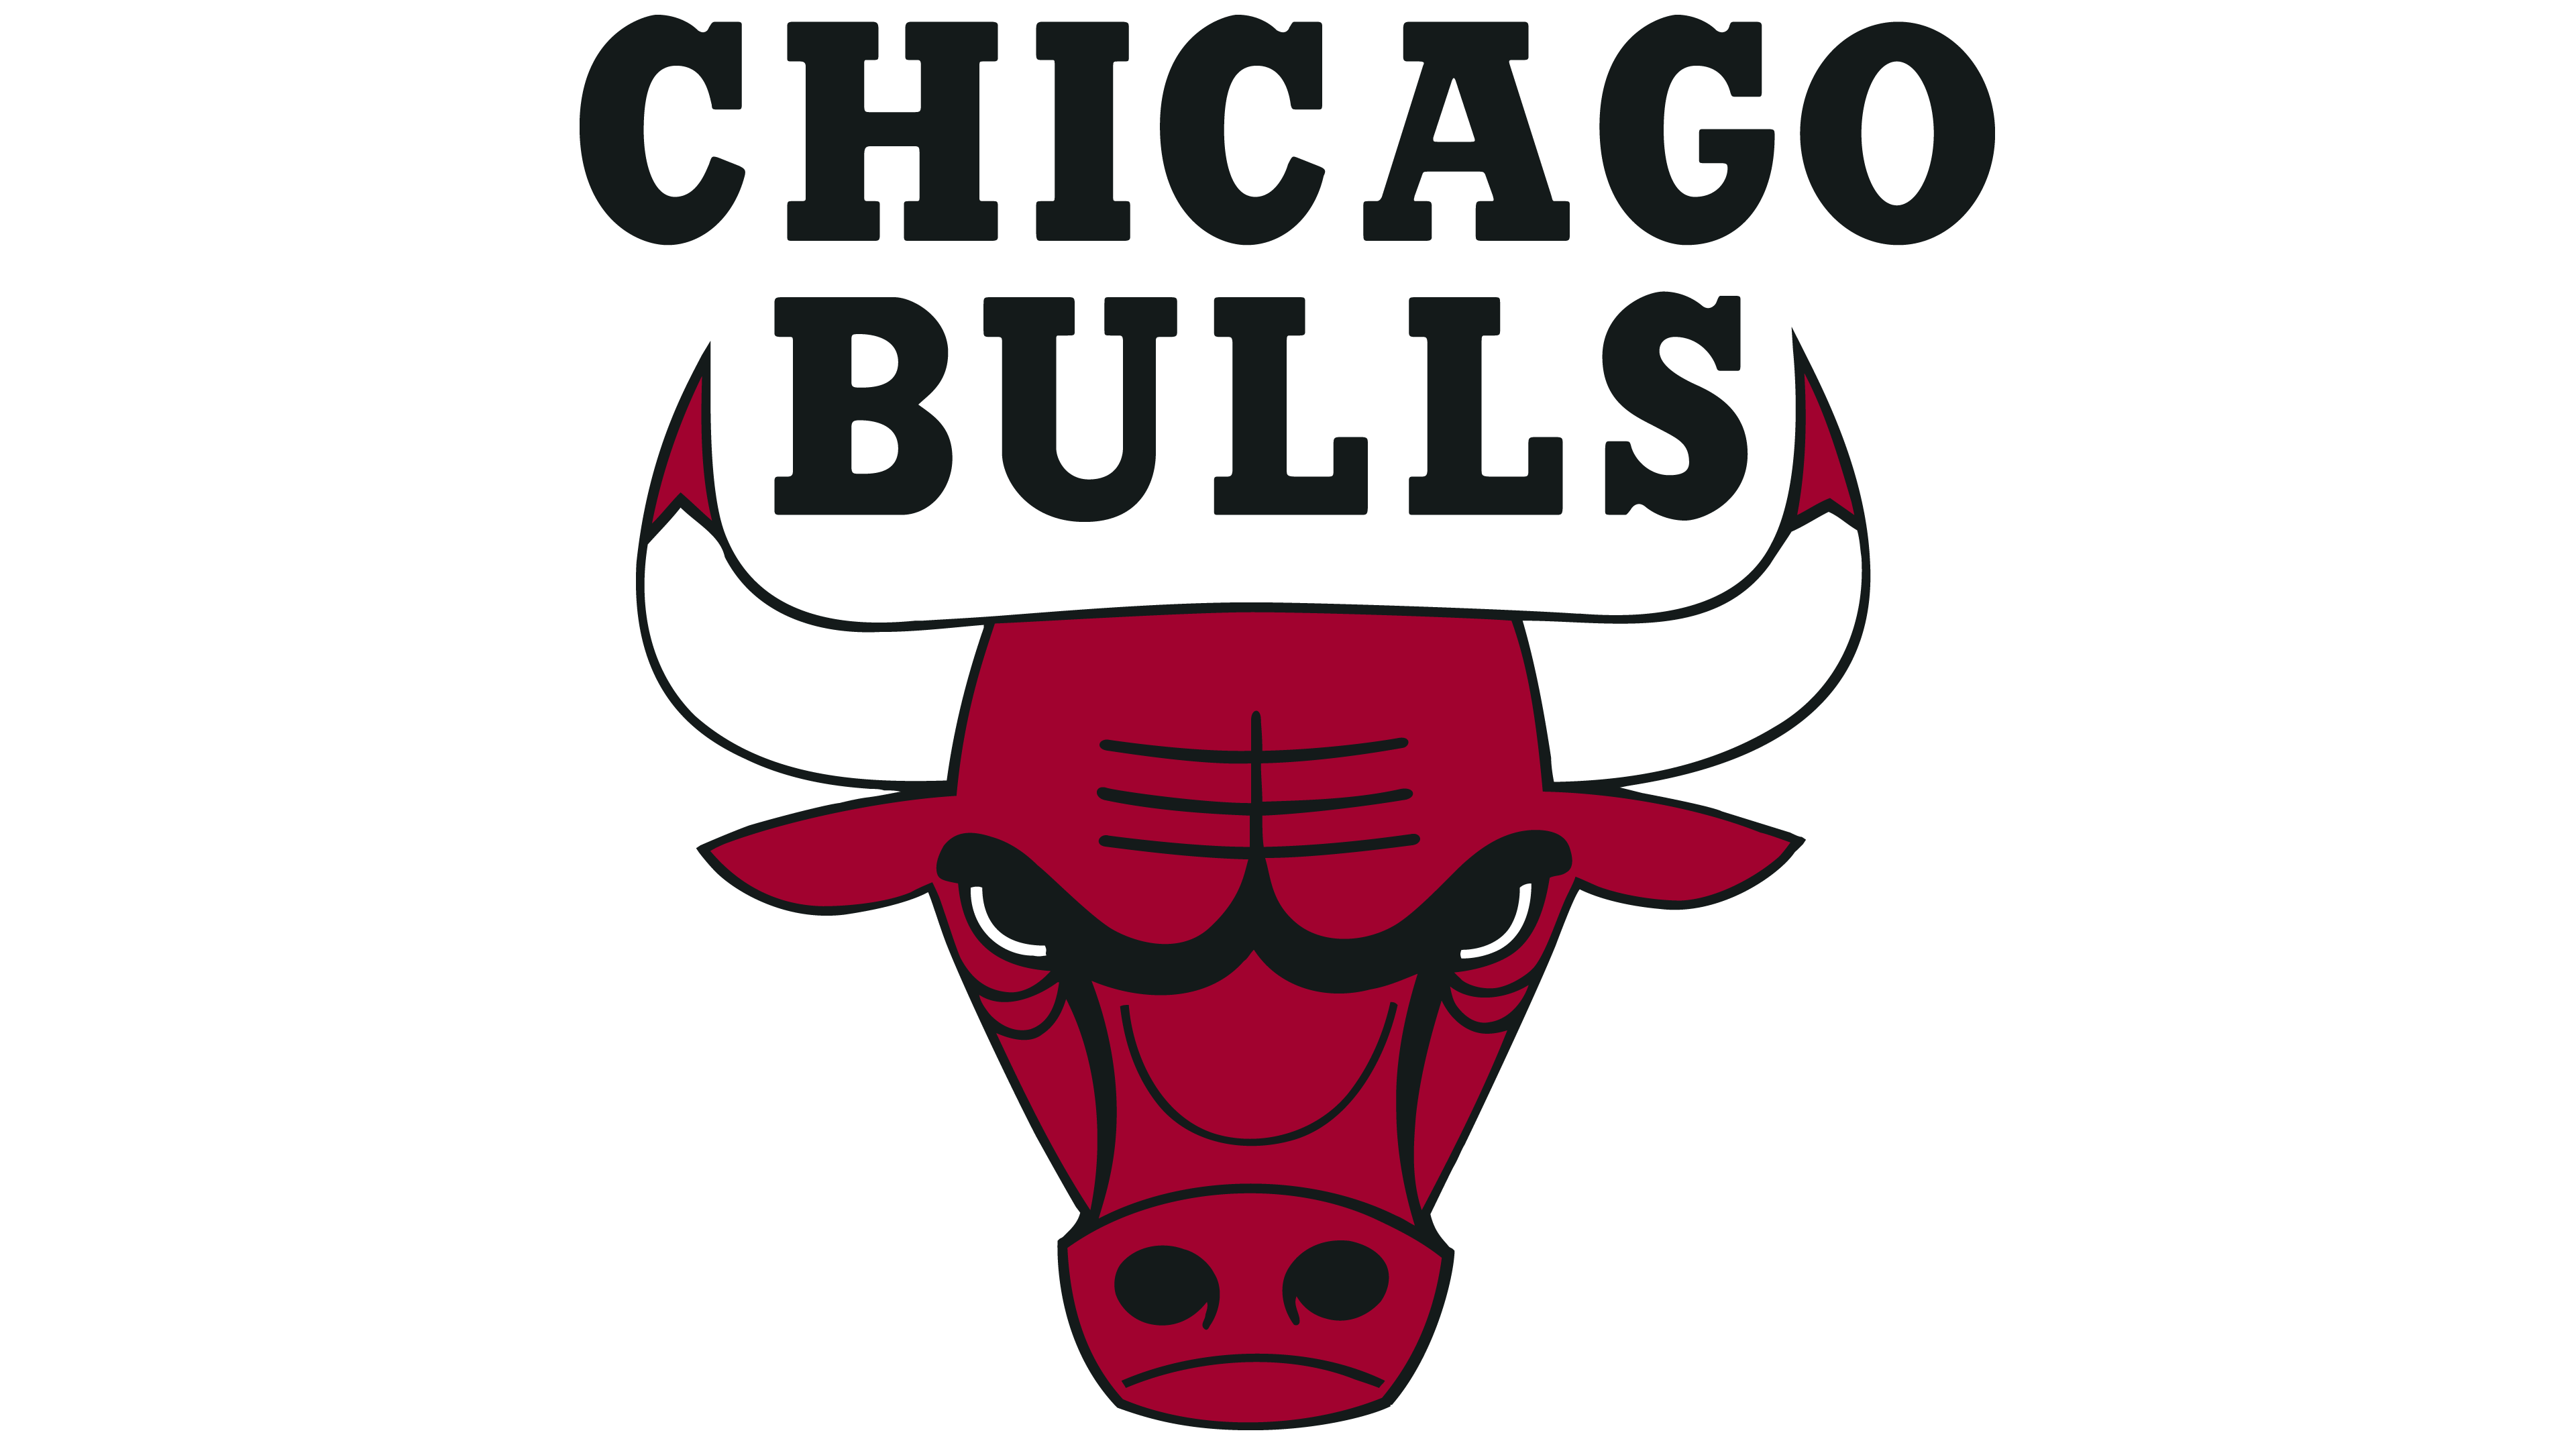 Bulls Logo - Chicago Bulls Logo History of the Team Name and emblem